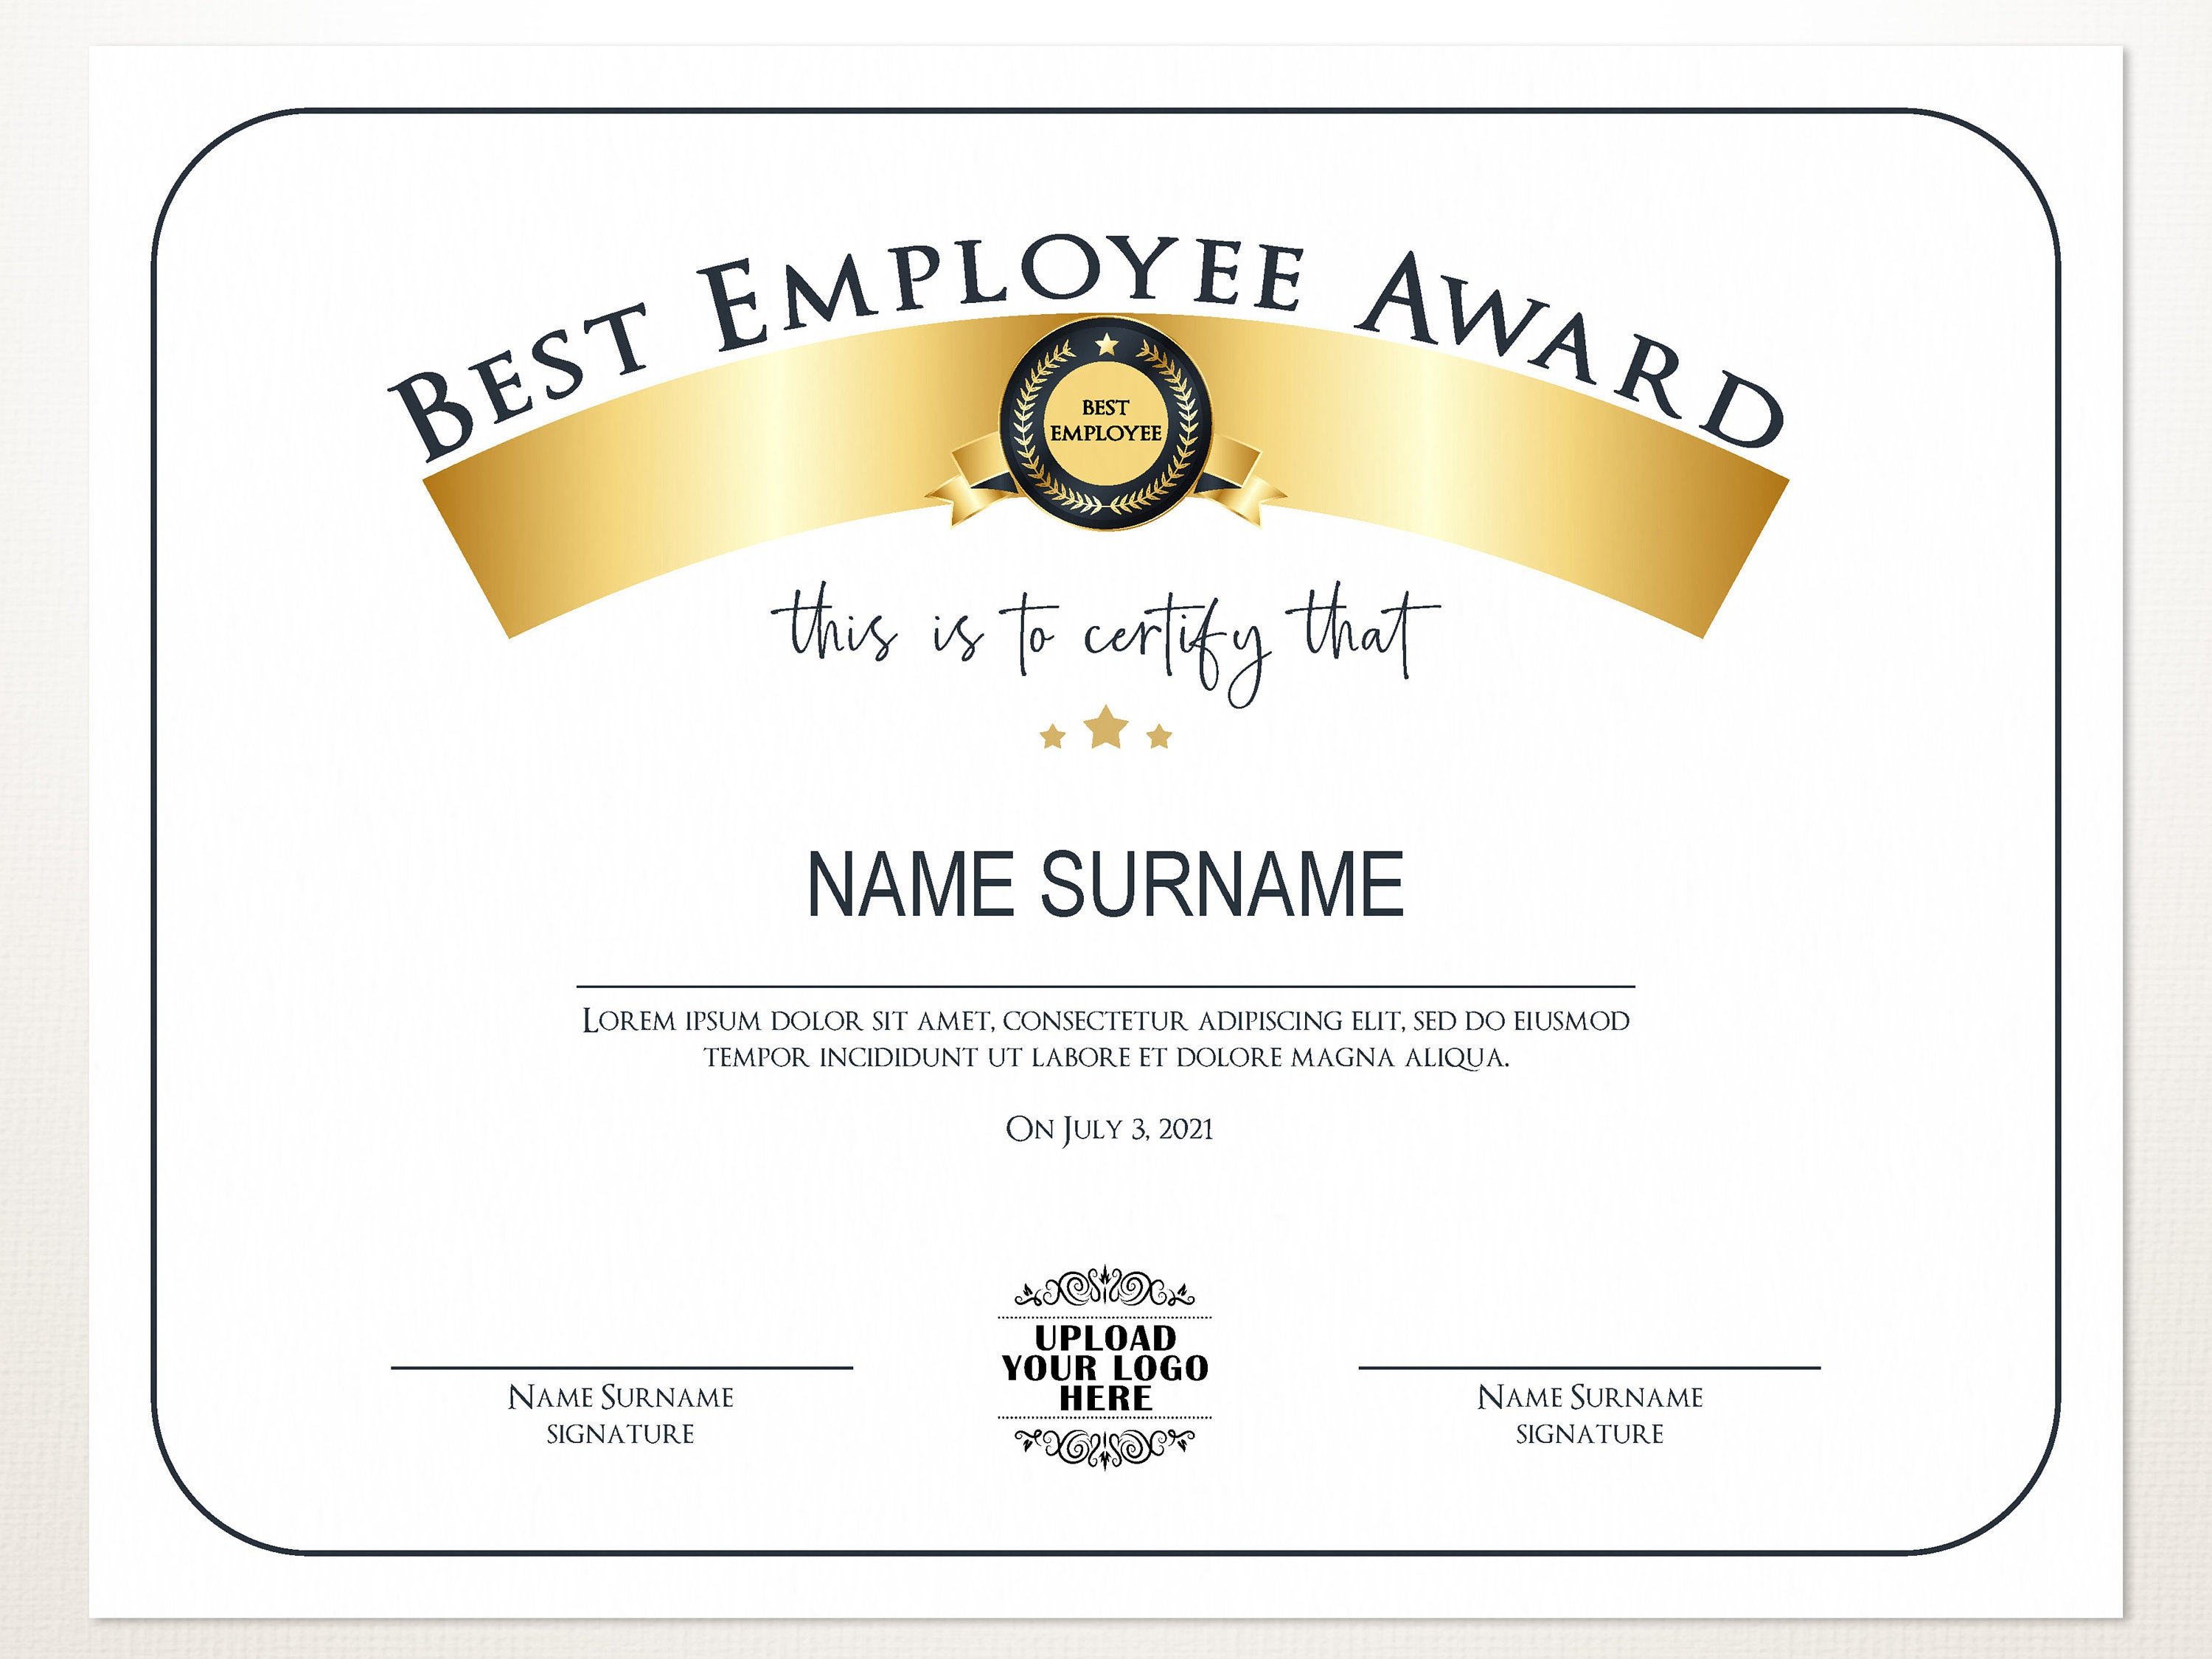 Best Employee Award Employee Award Template Editable LOGO | Etsy